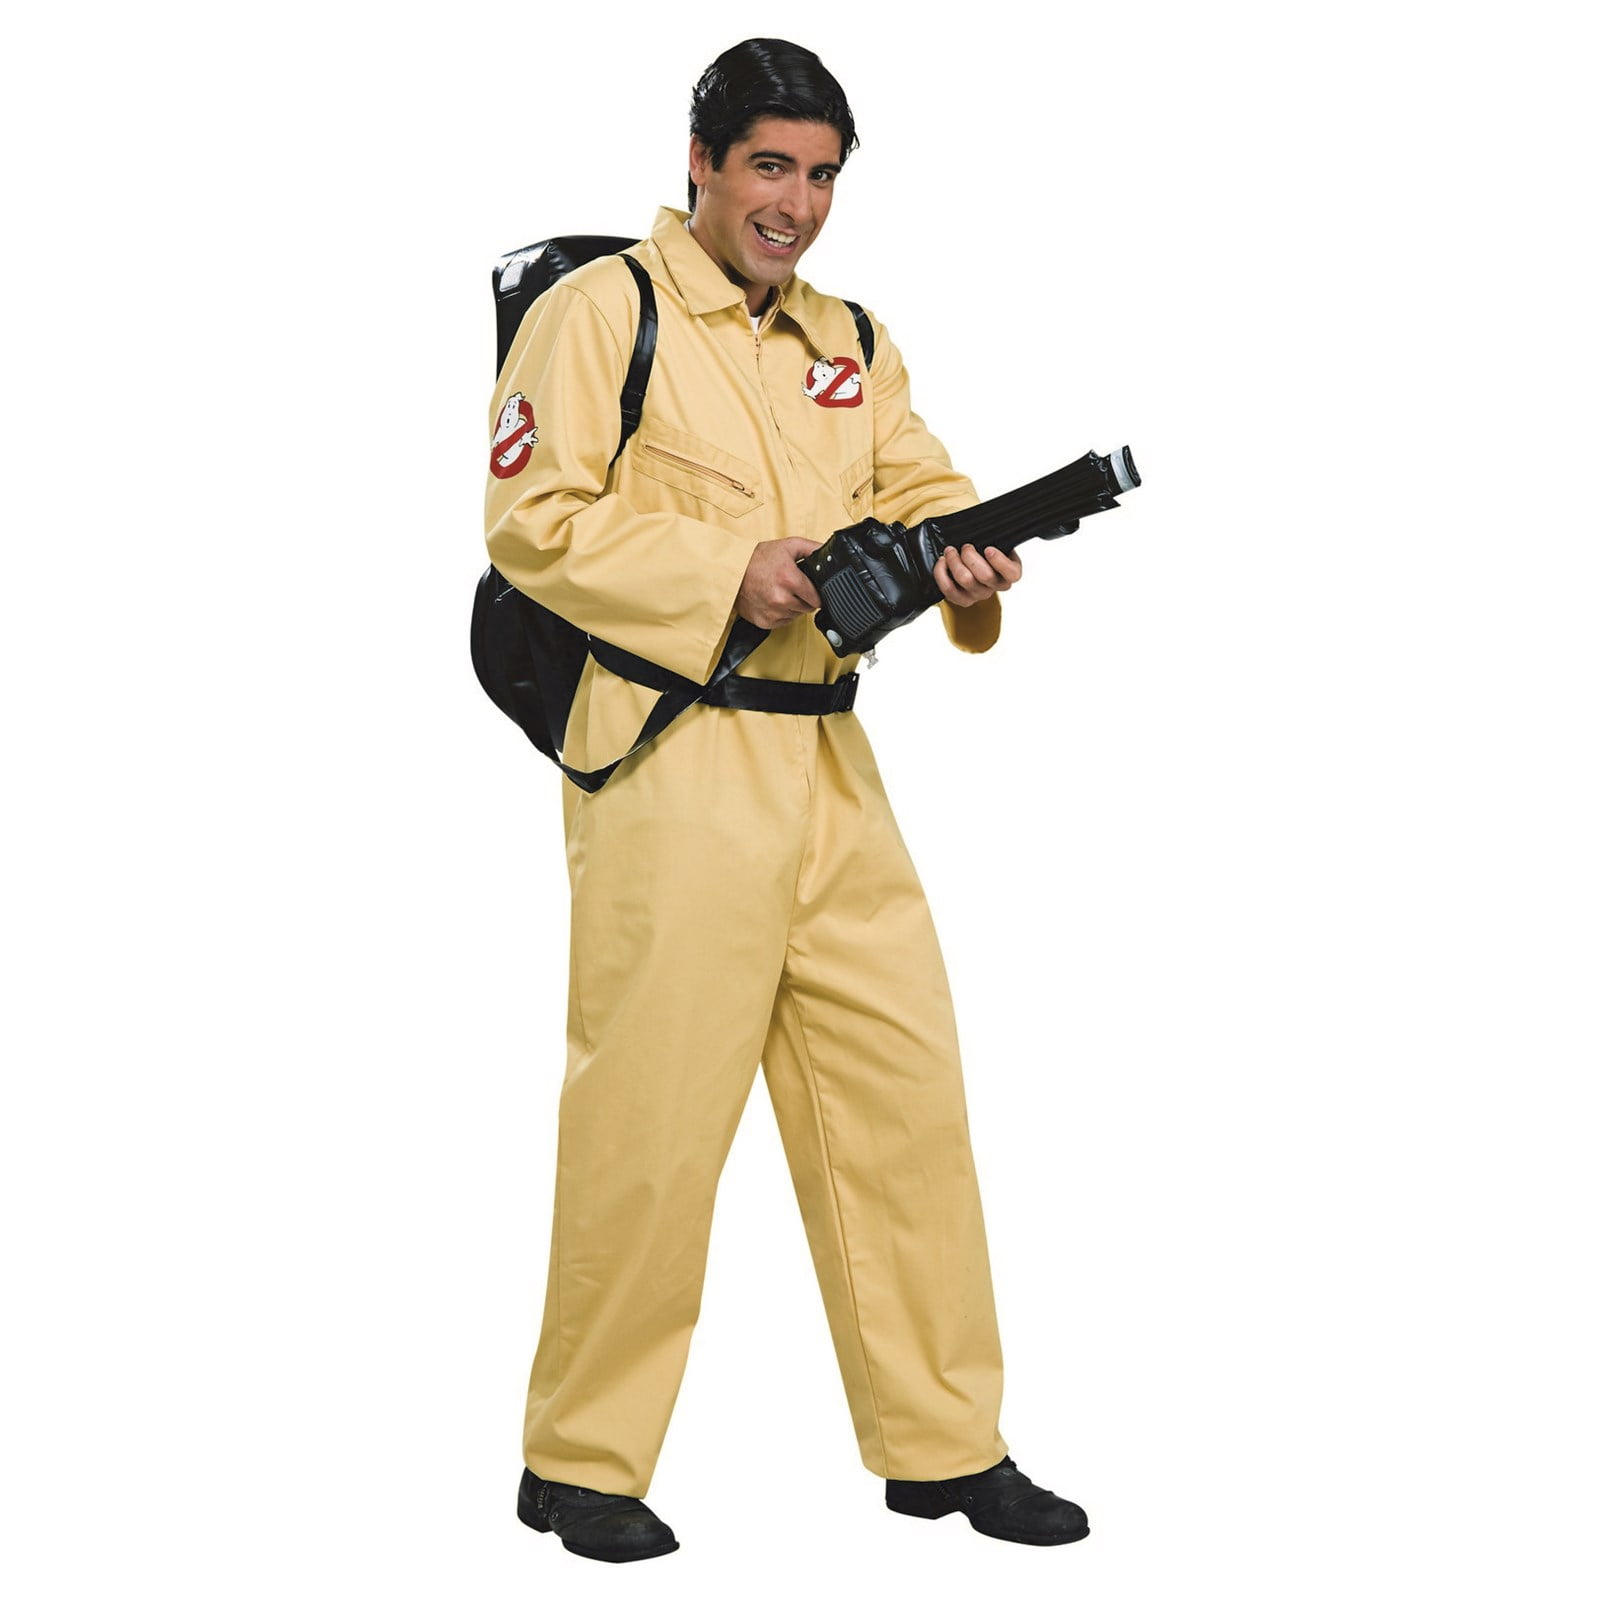 ghostbuster uniform